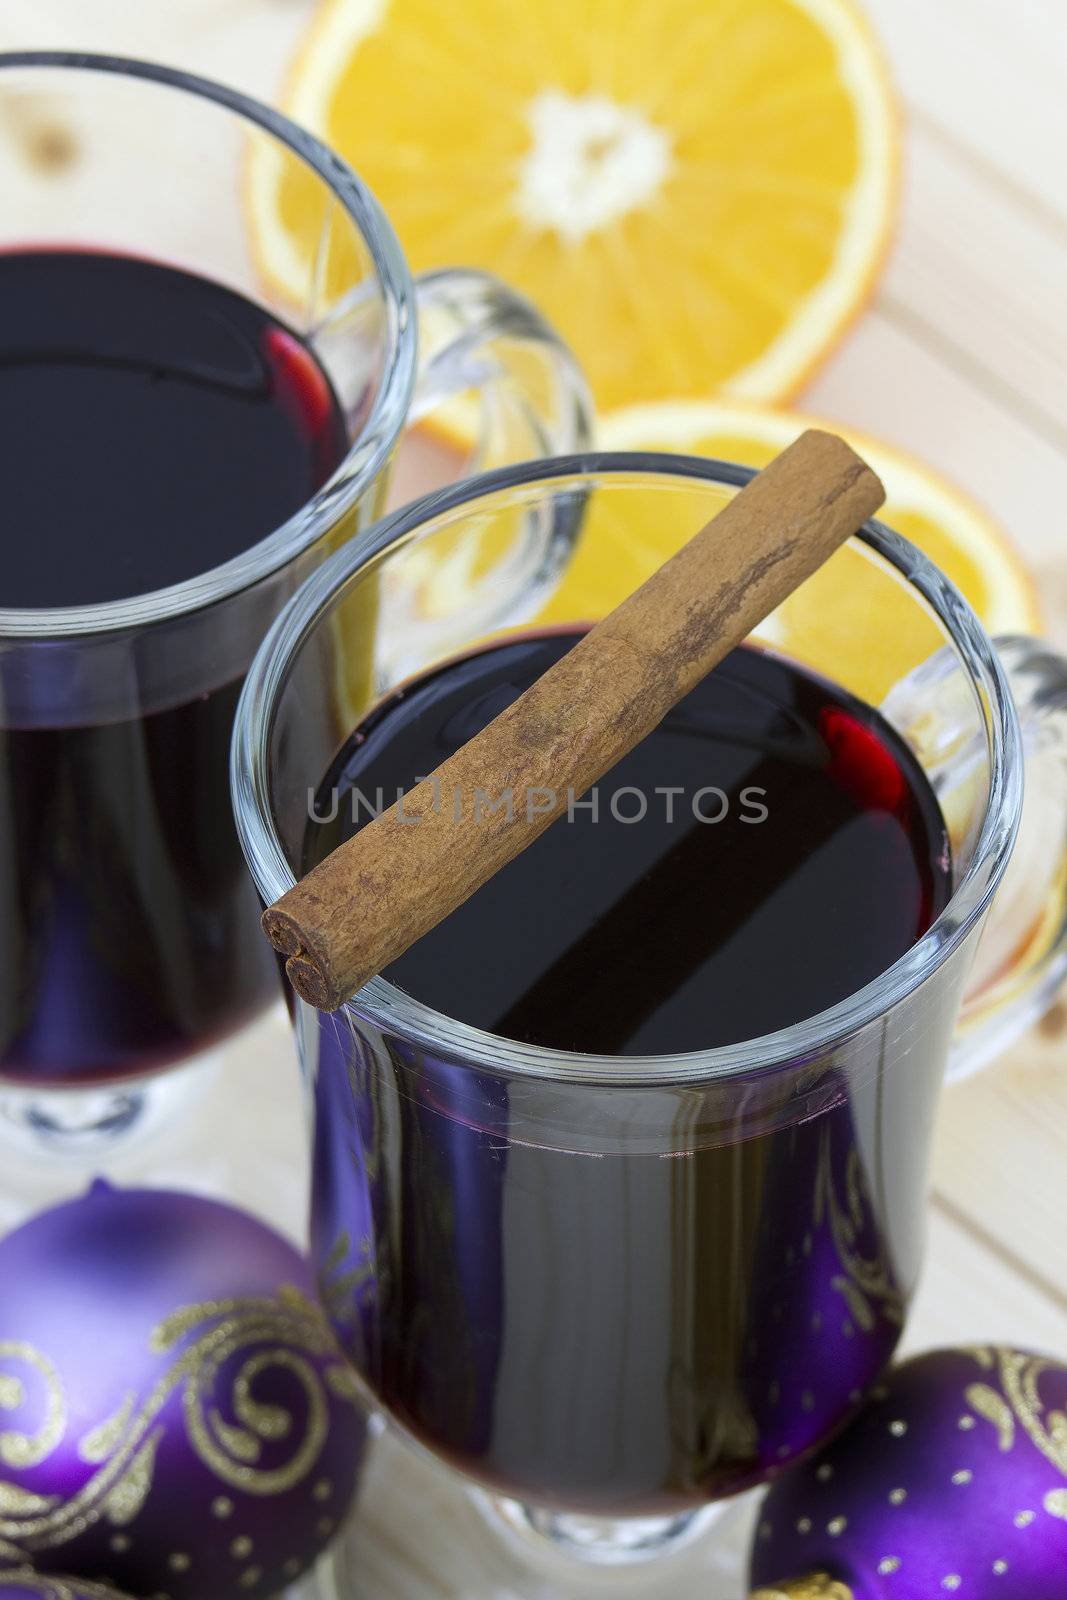 hot wine and cinnamon stick by miradrozdowski